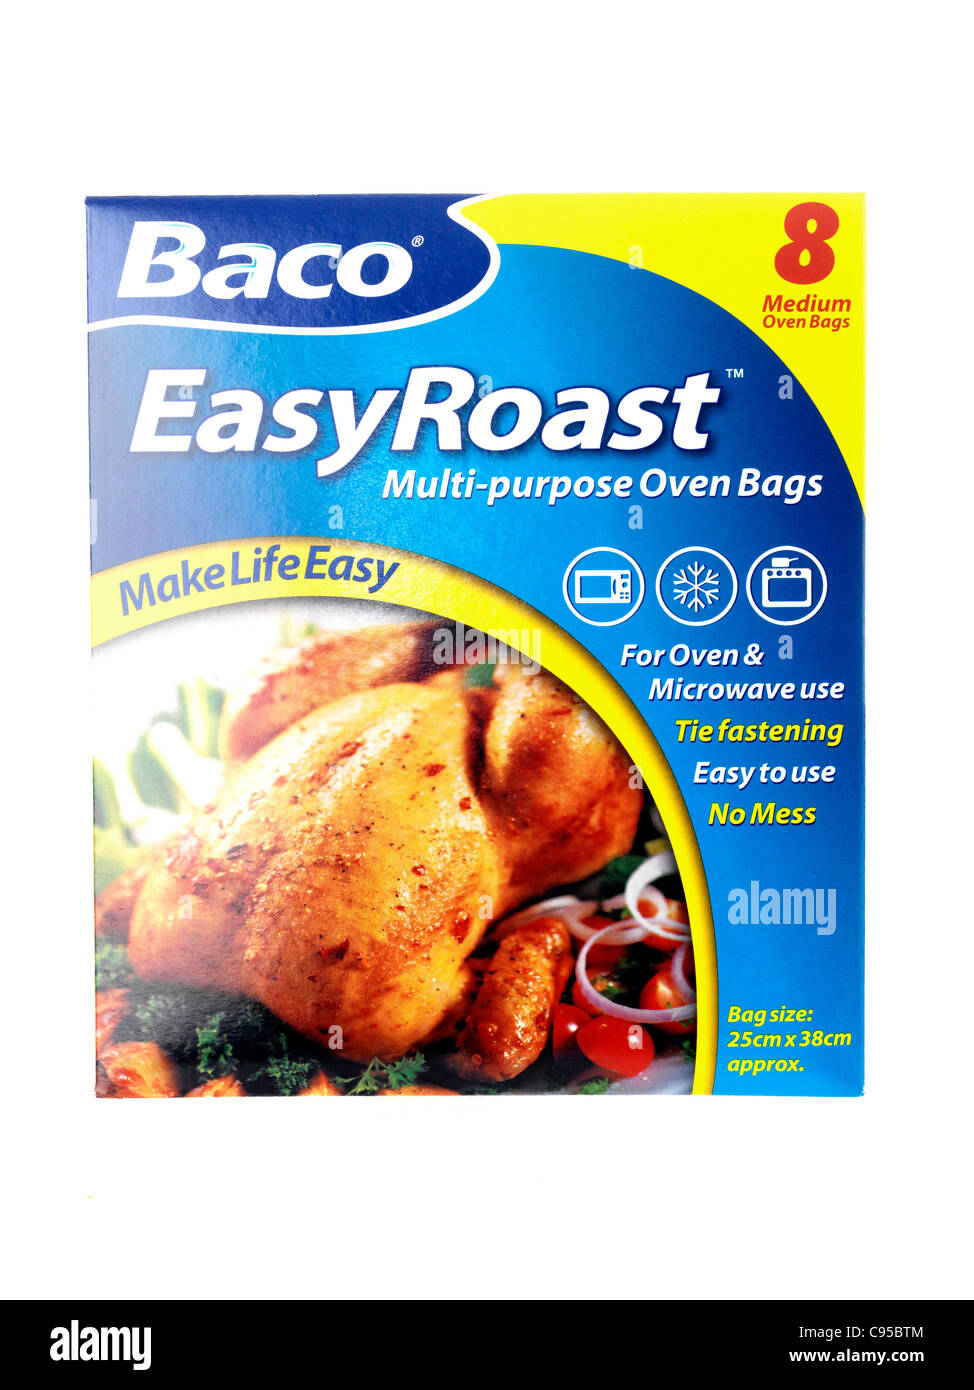 https://c8.alamy.com/comp/C95BTM/baco-easy-roast-oven-bags-C95BTM.jpg